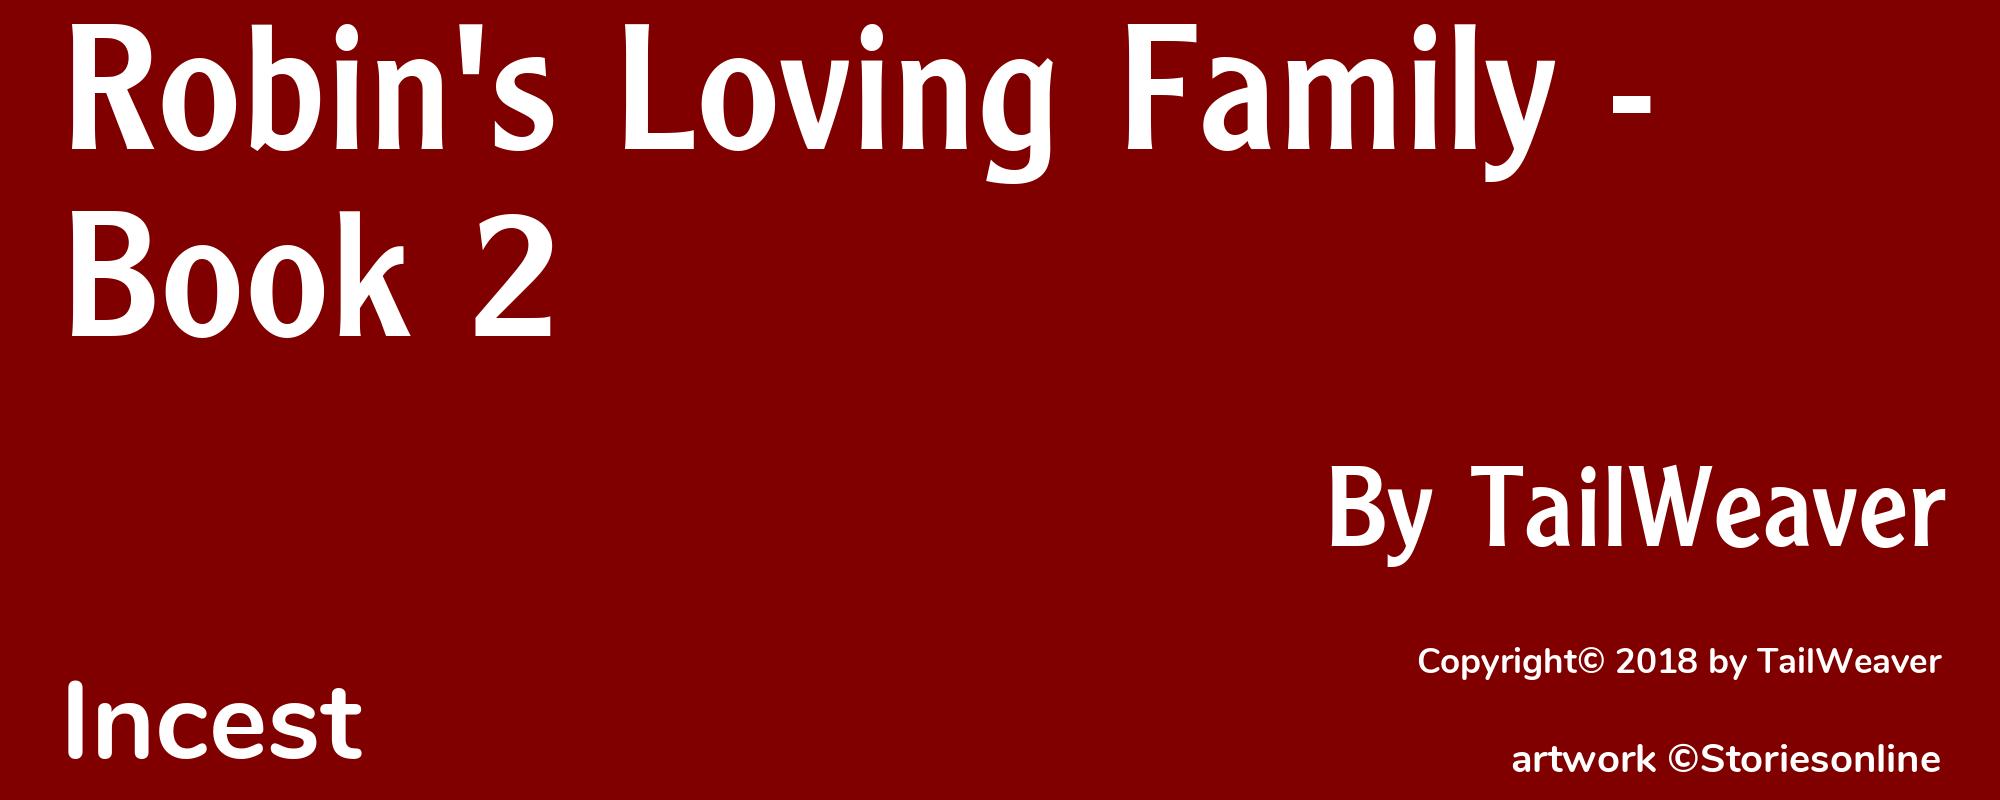 Robin's Loving Family - Book 2 - Cover